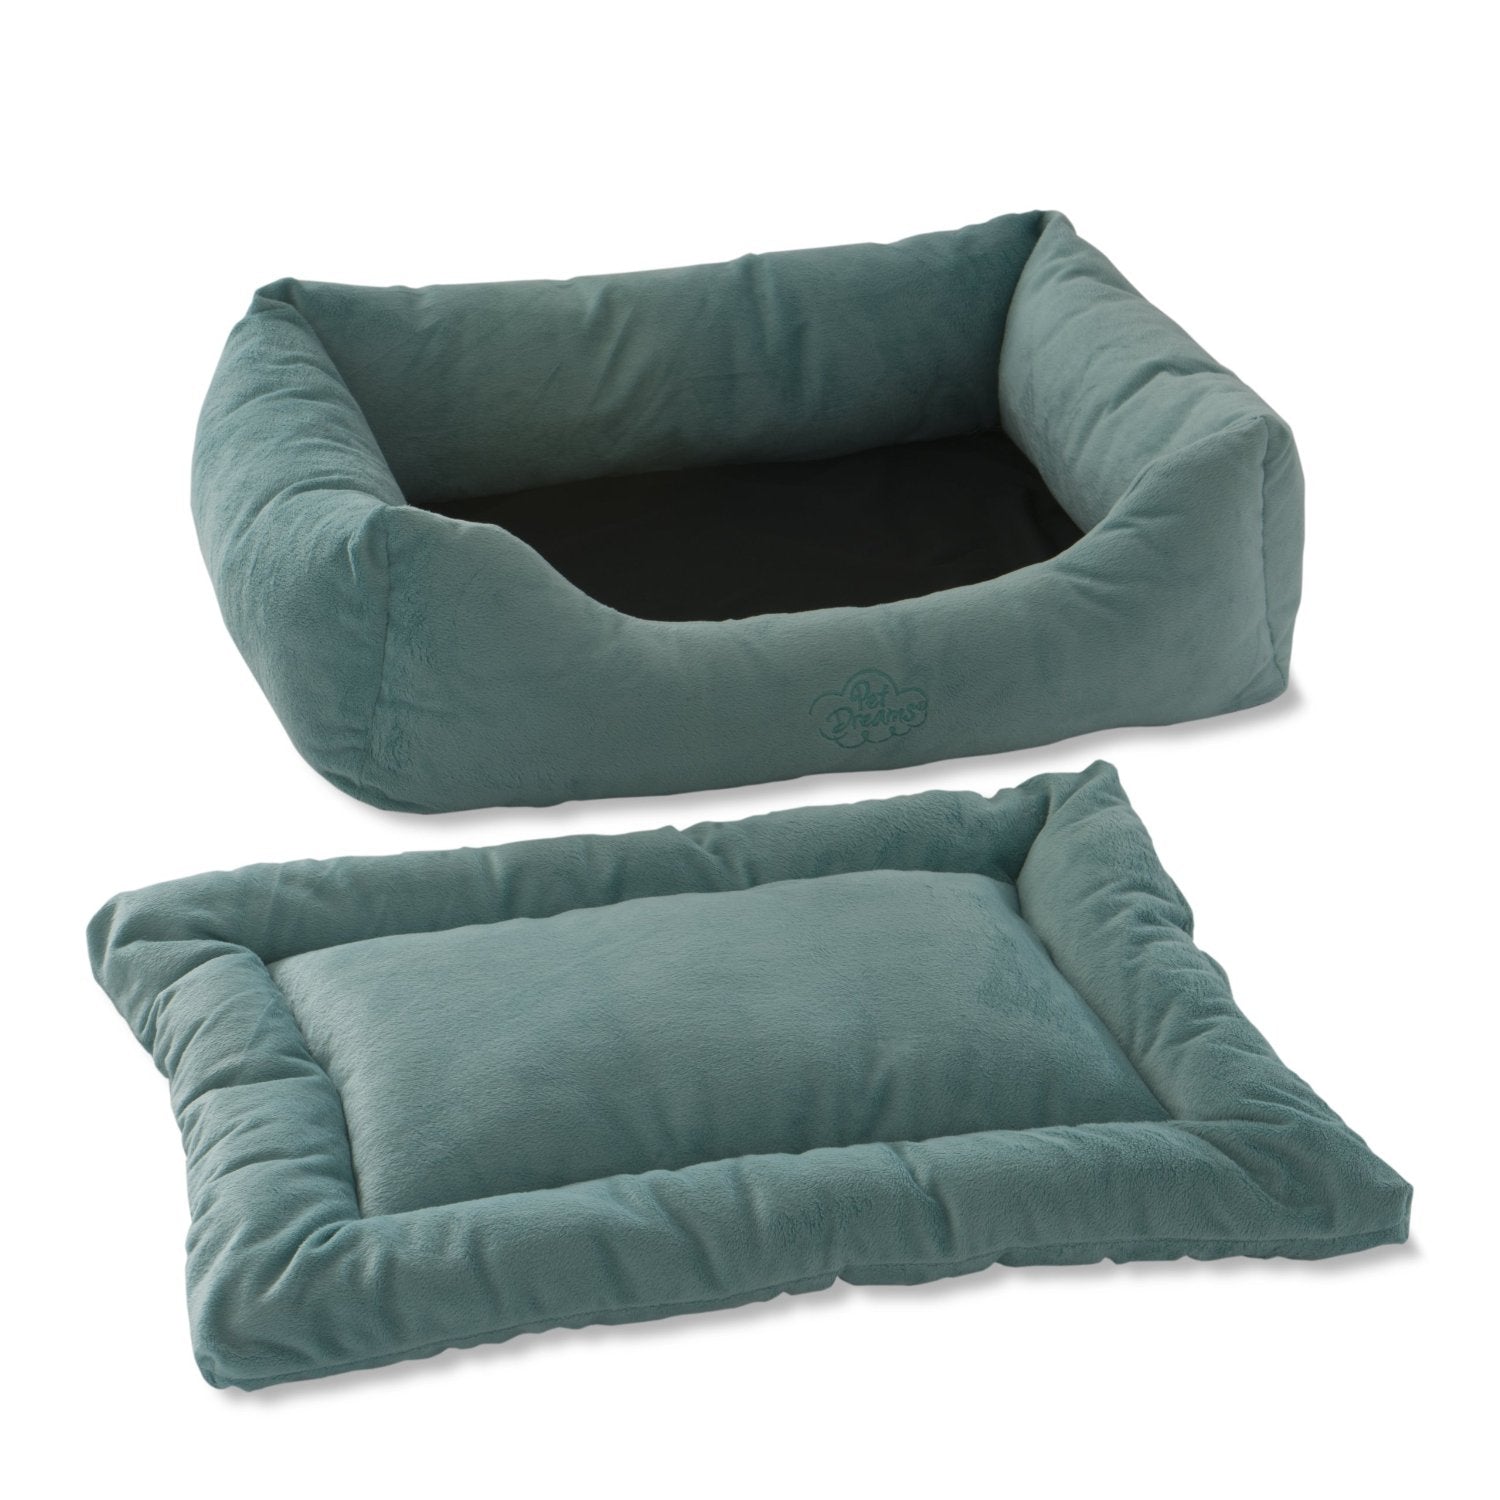 Pet Dreams 2-in-1 Plush Bumper Dog Bed, X-Large, Blue